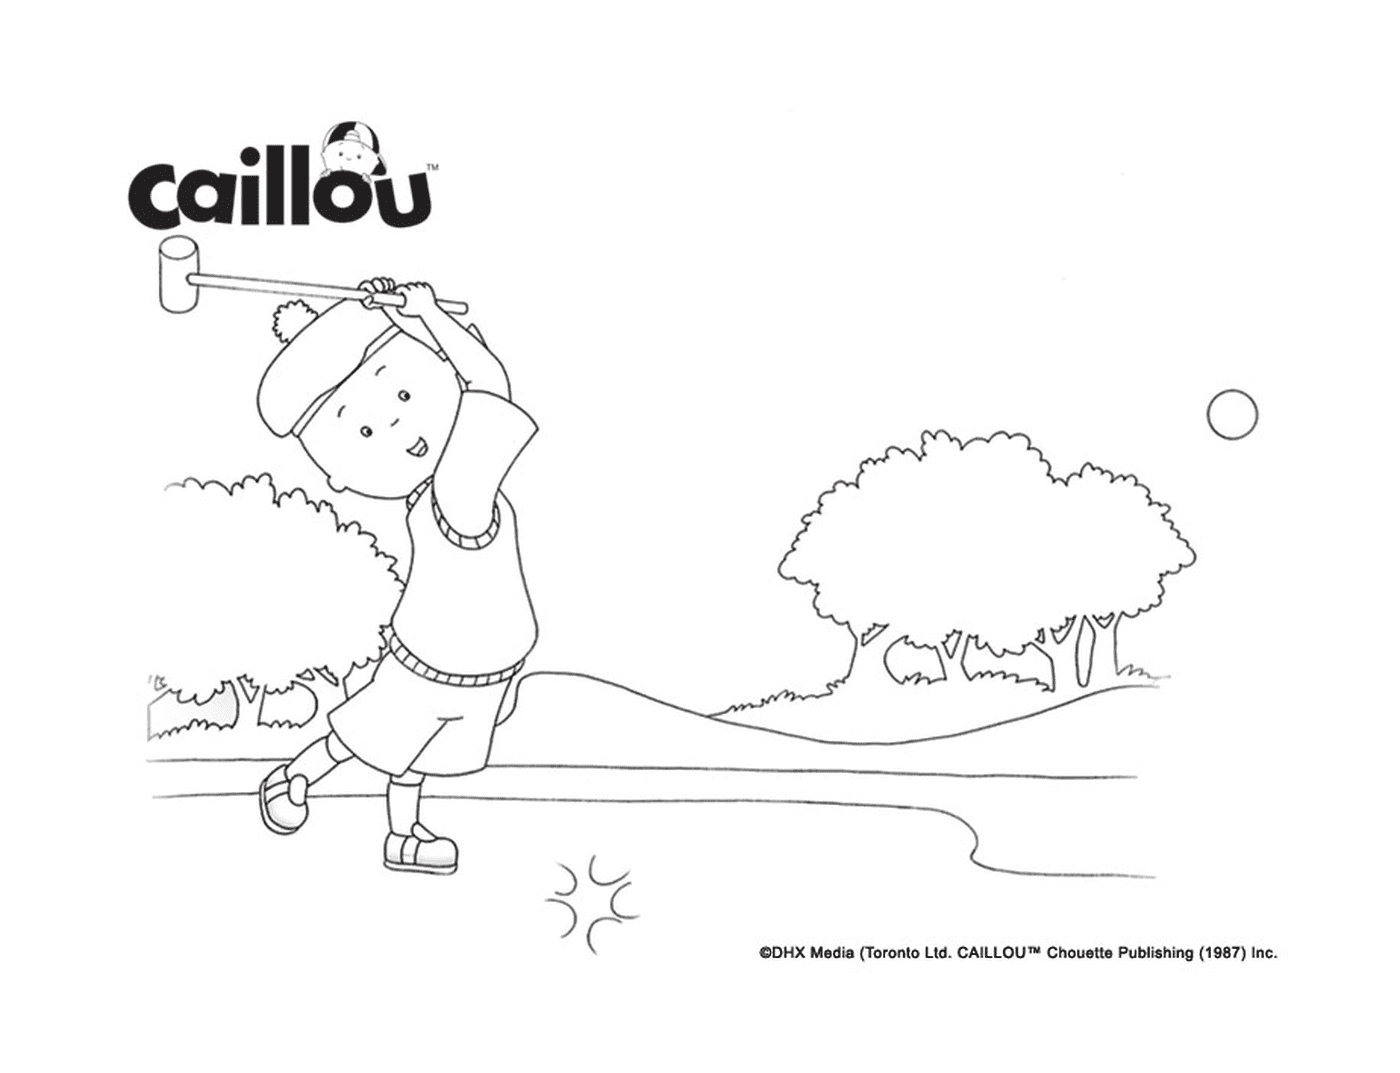  Caillou lernt Golf zu spielen 